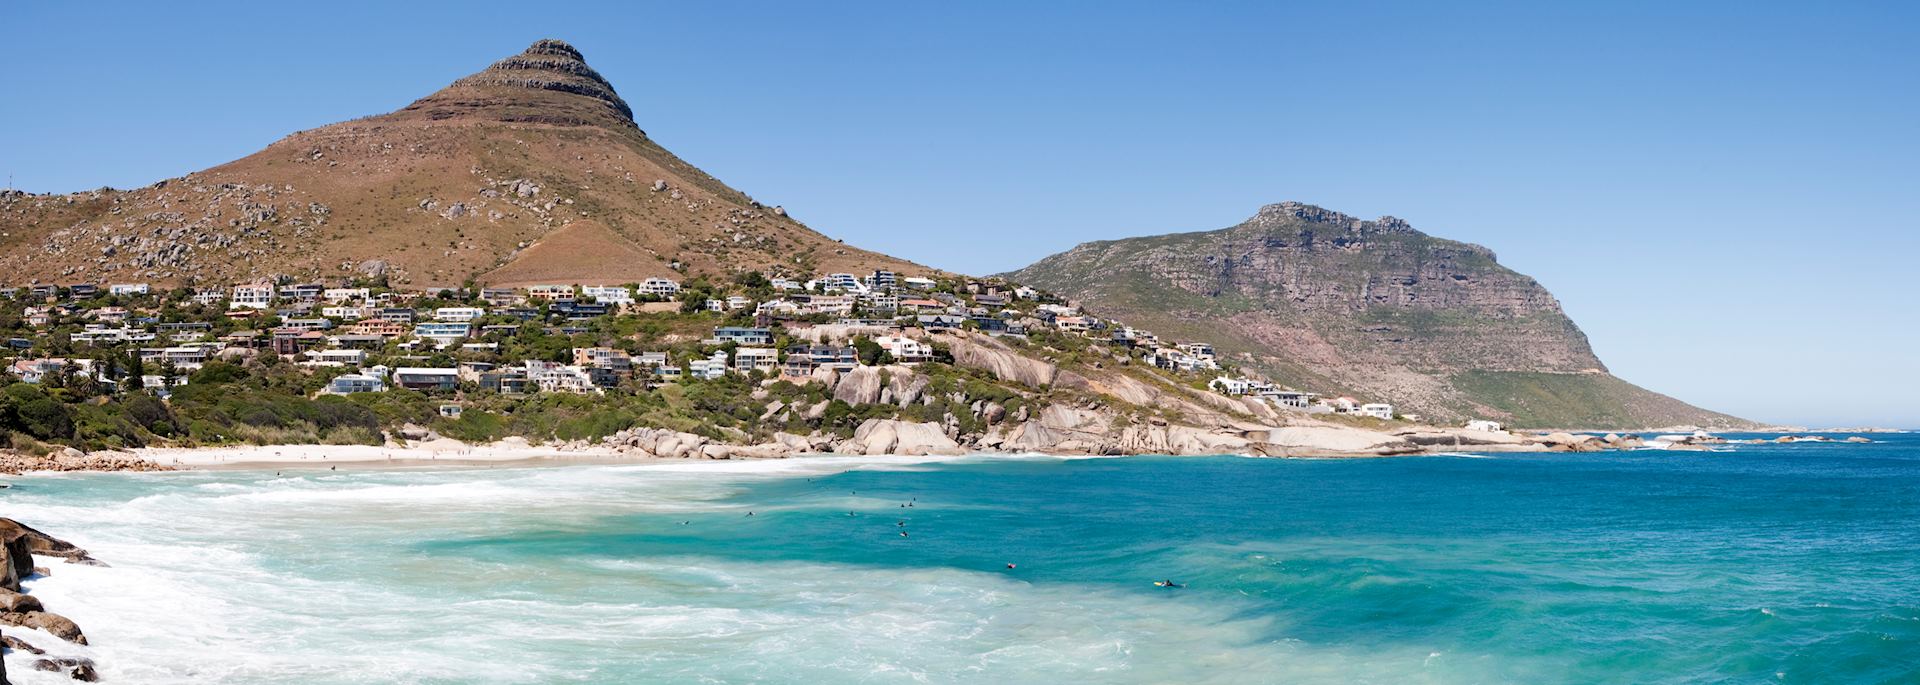 Llandudno, a suburb of Cape Town